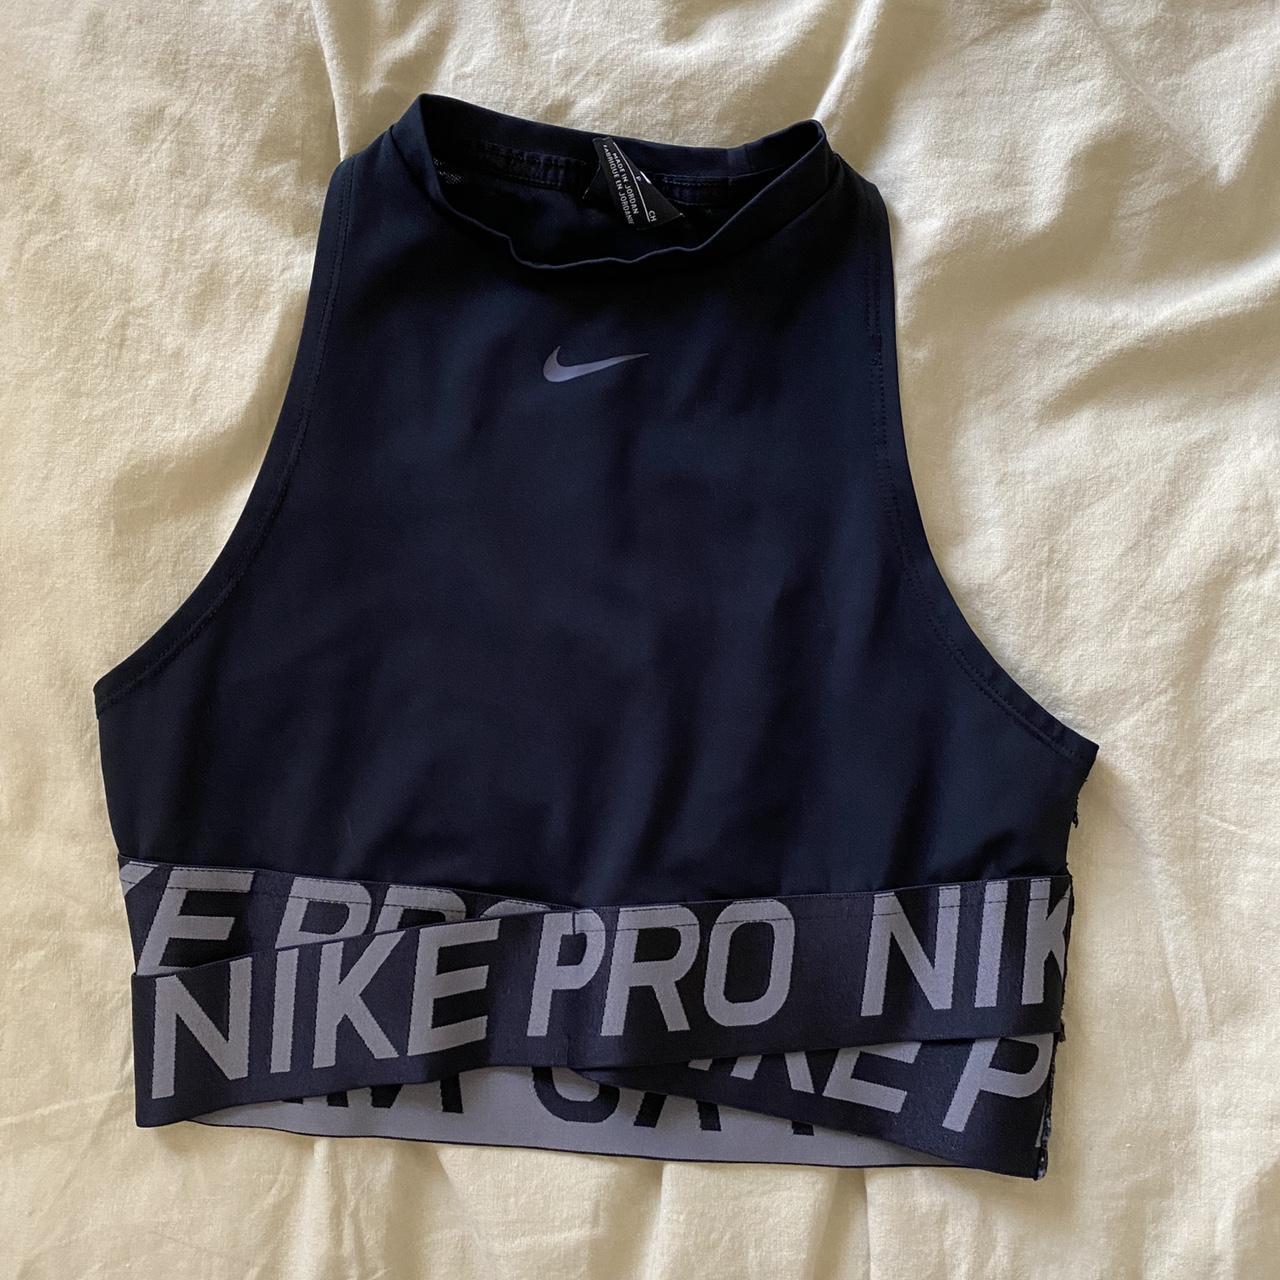 nike pro cross shirt - Depop